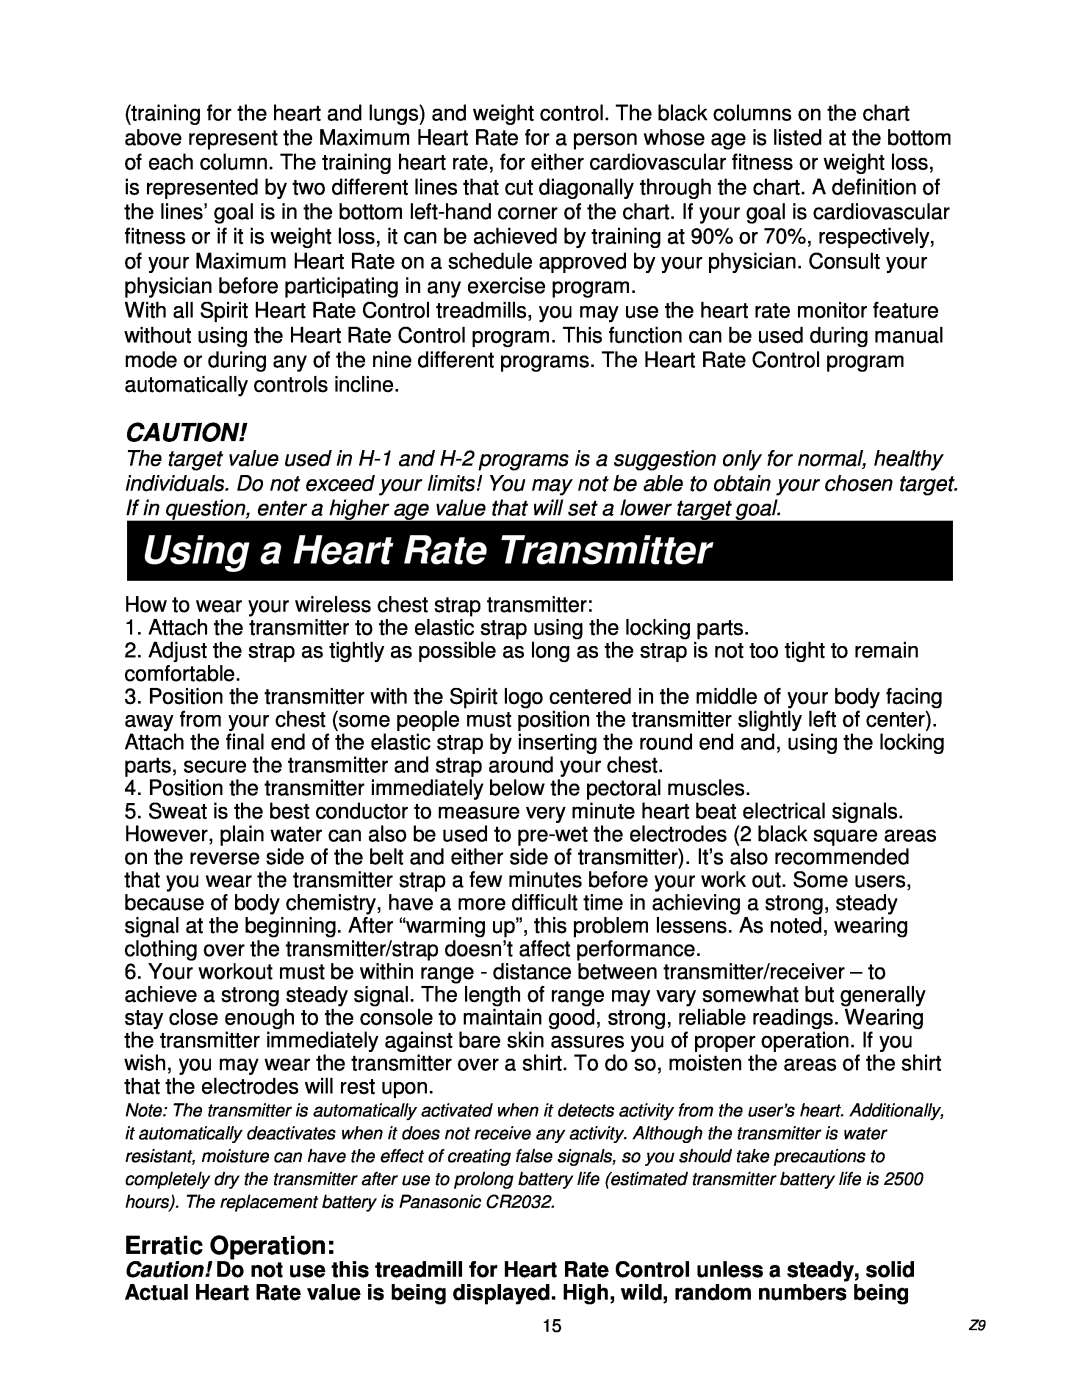 Spirit Z9 owner manual Using a Heart Rate Transmitter, Erratic Operation 